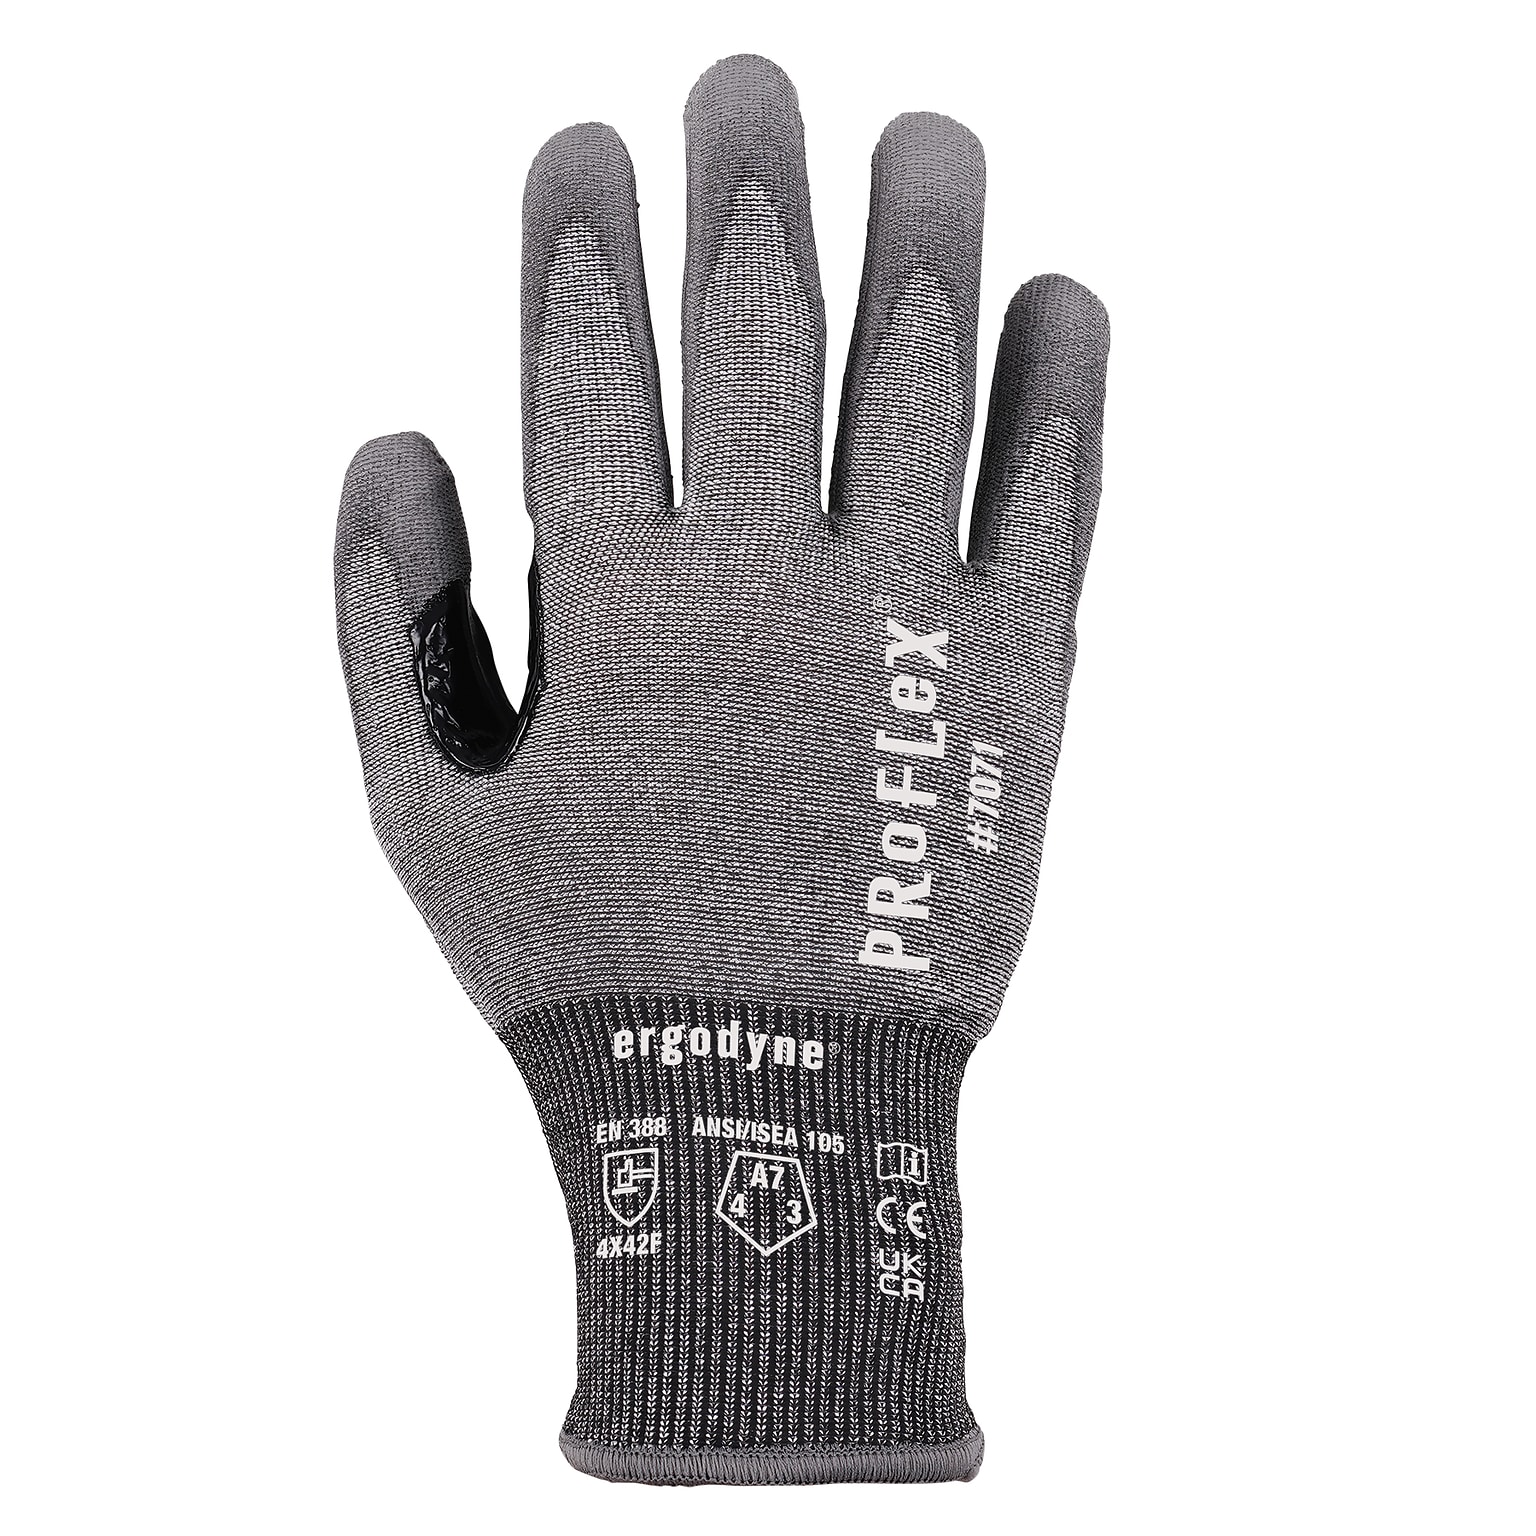 Ergodyne ProFlex 7071 PU Coated Cut-Resistant Gloves, ANSI A7, Gray, XL, 12 Pair (18065)